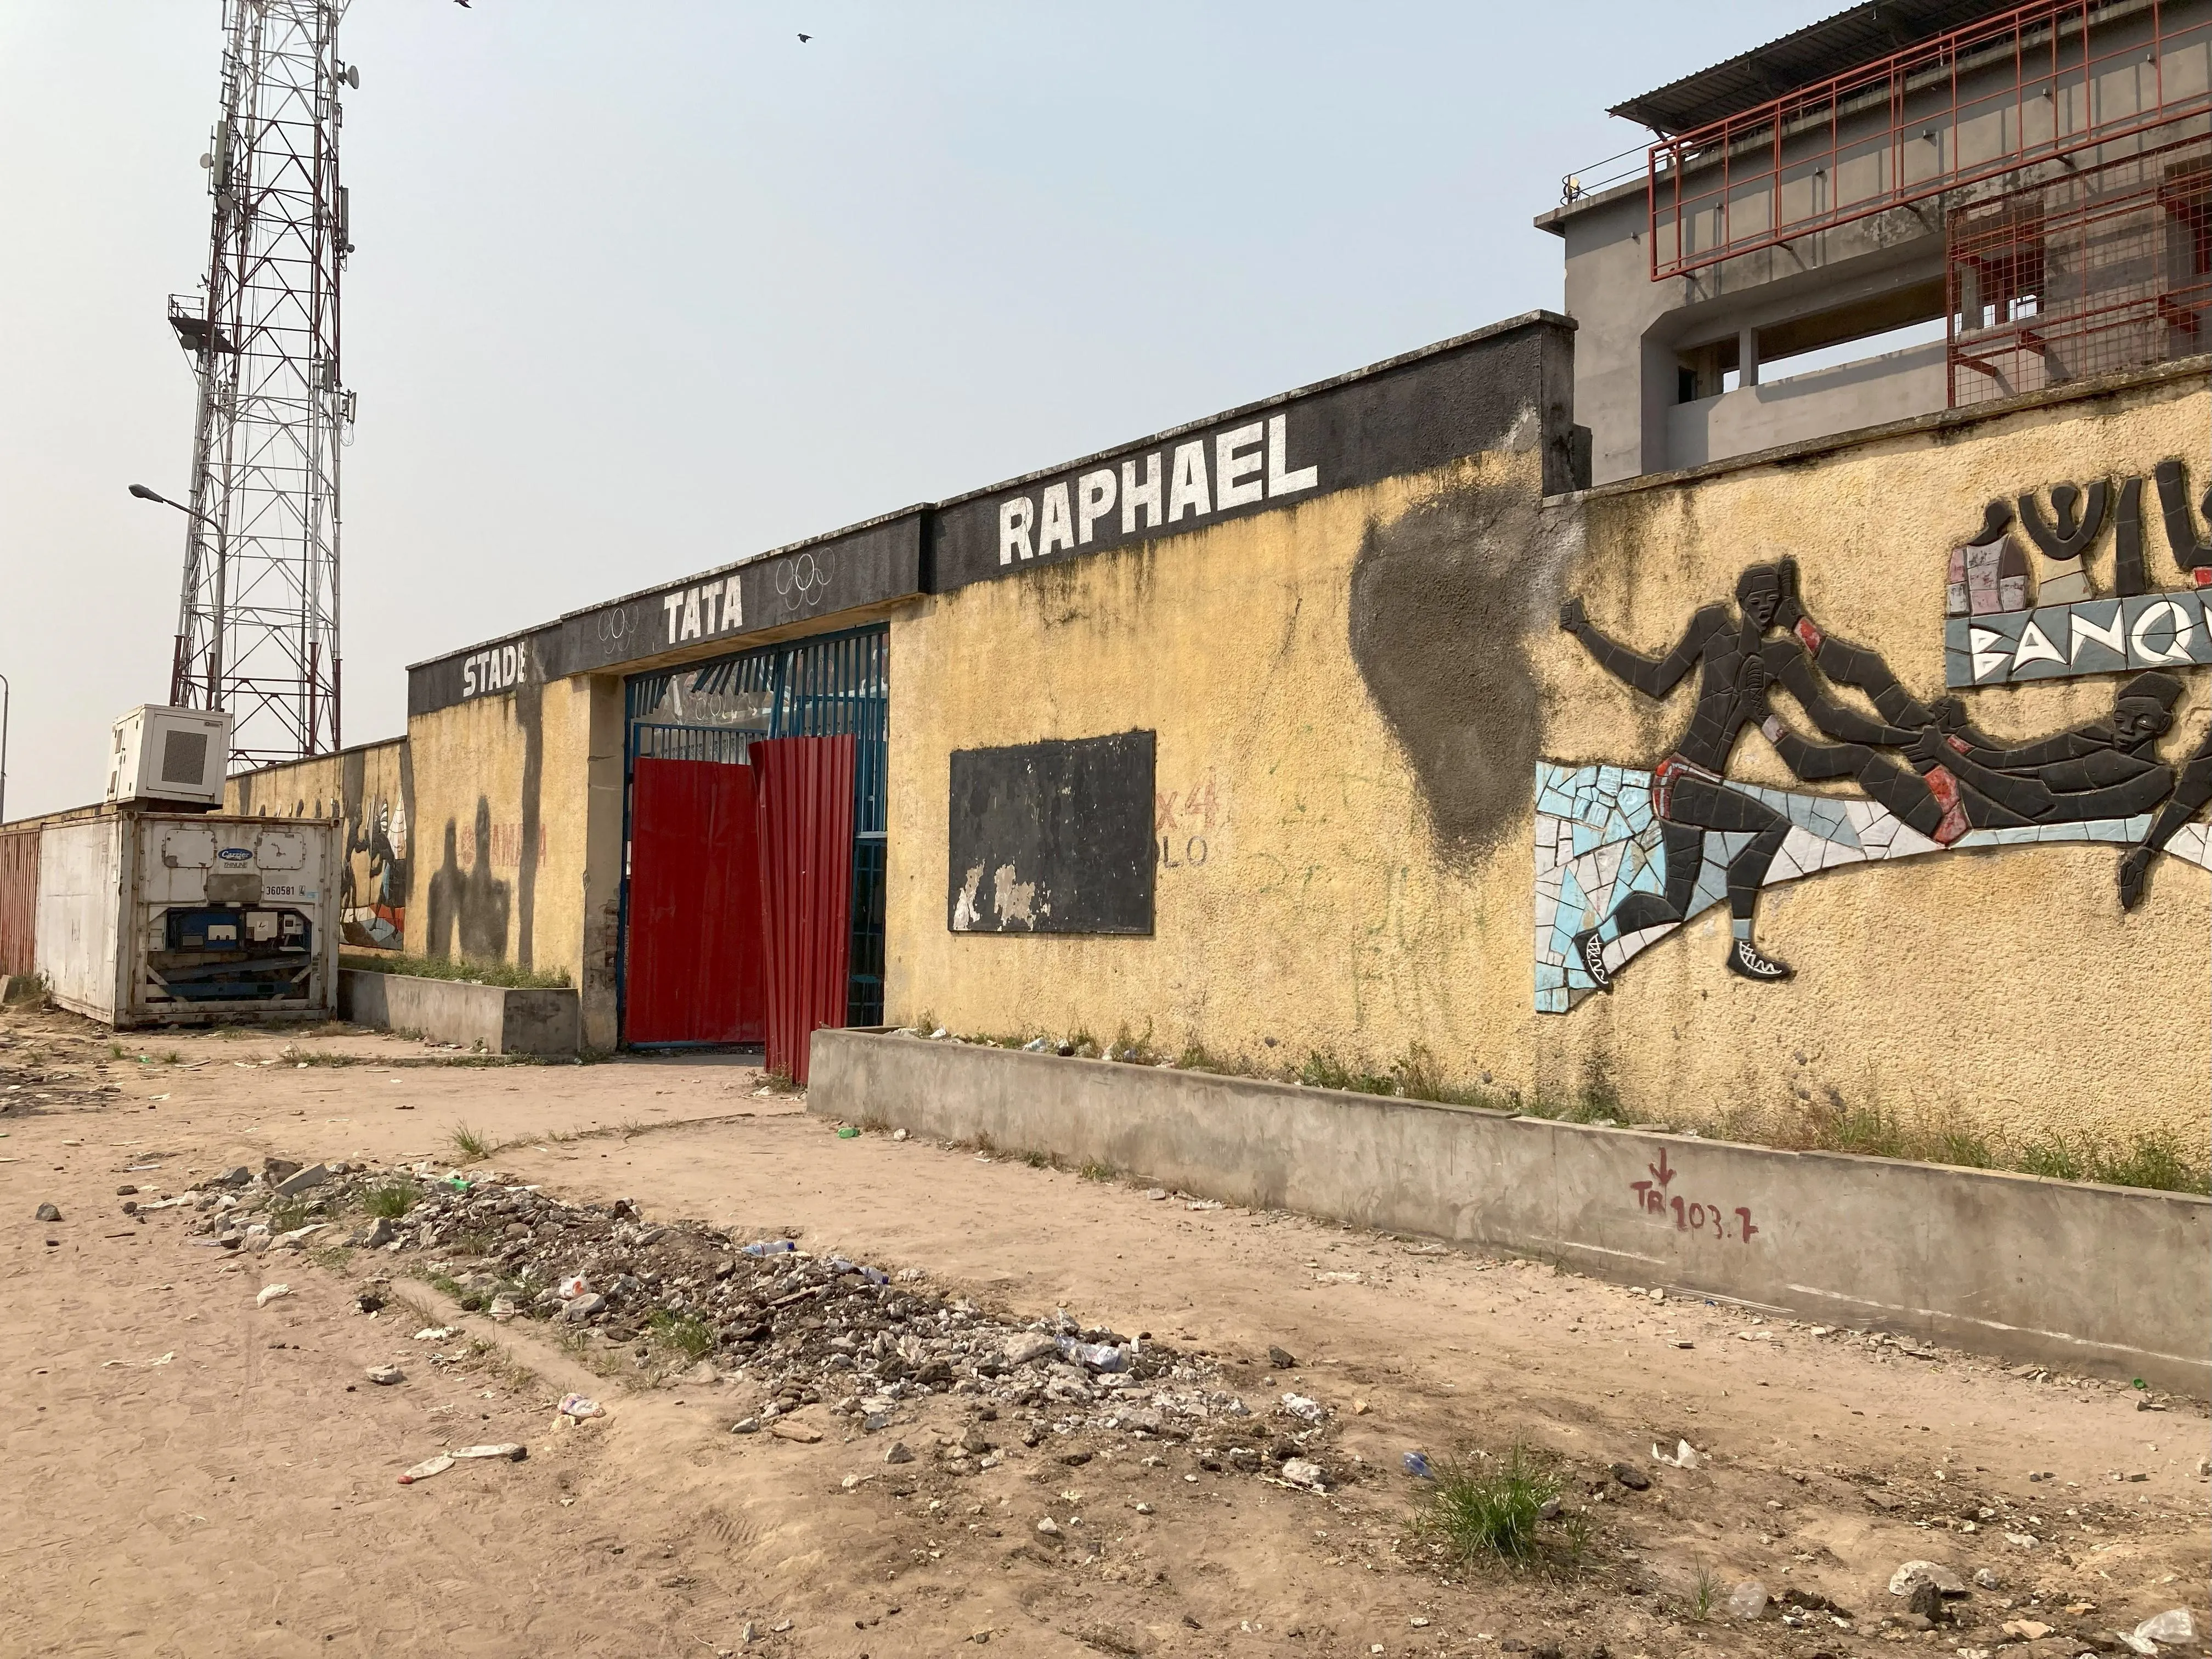 Stade Tata Raphael, Kinshasa, DRC